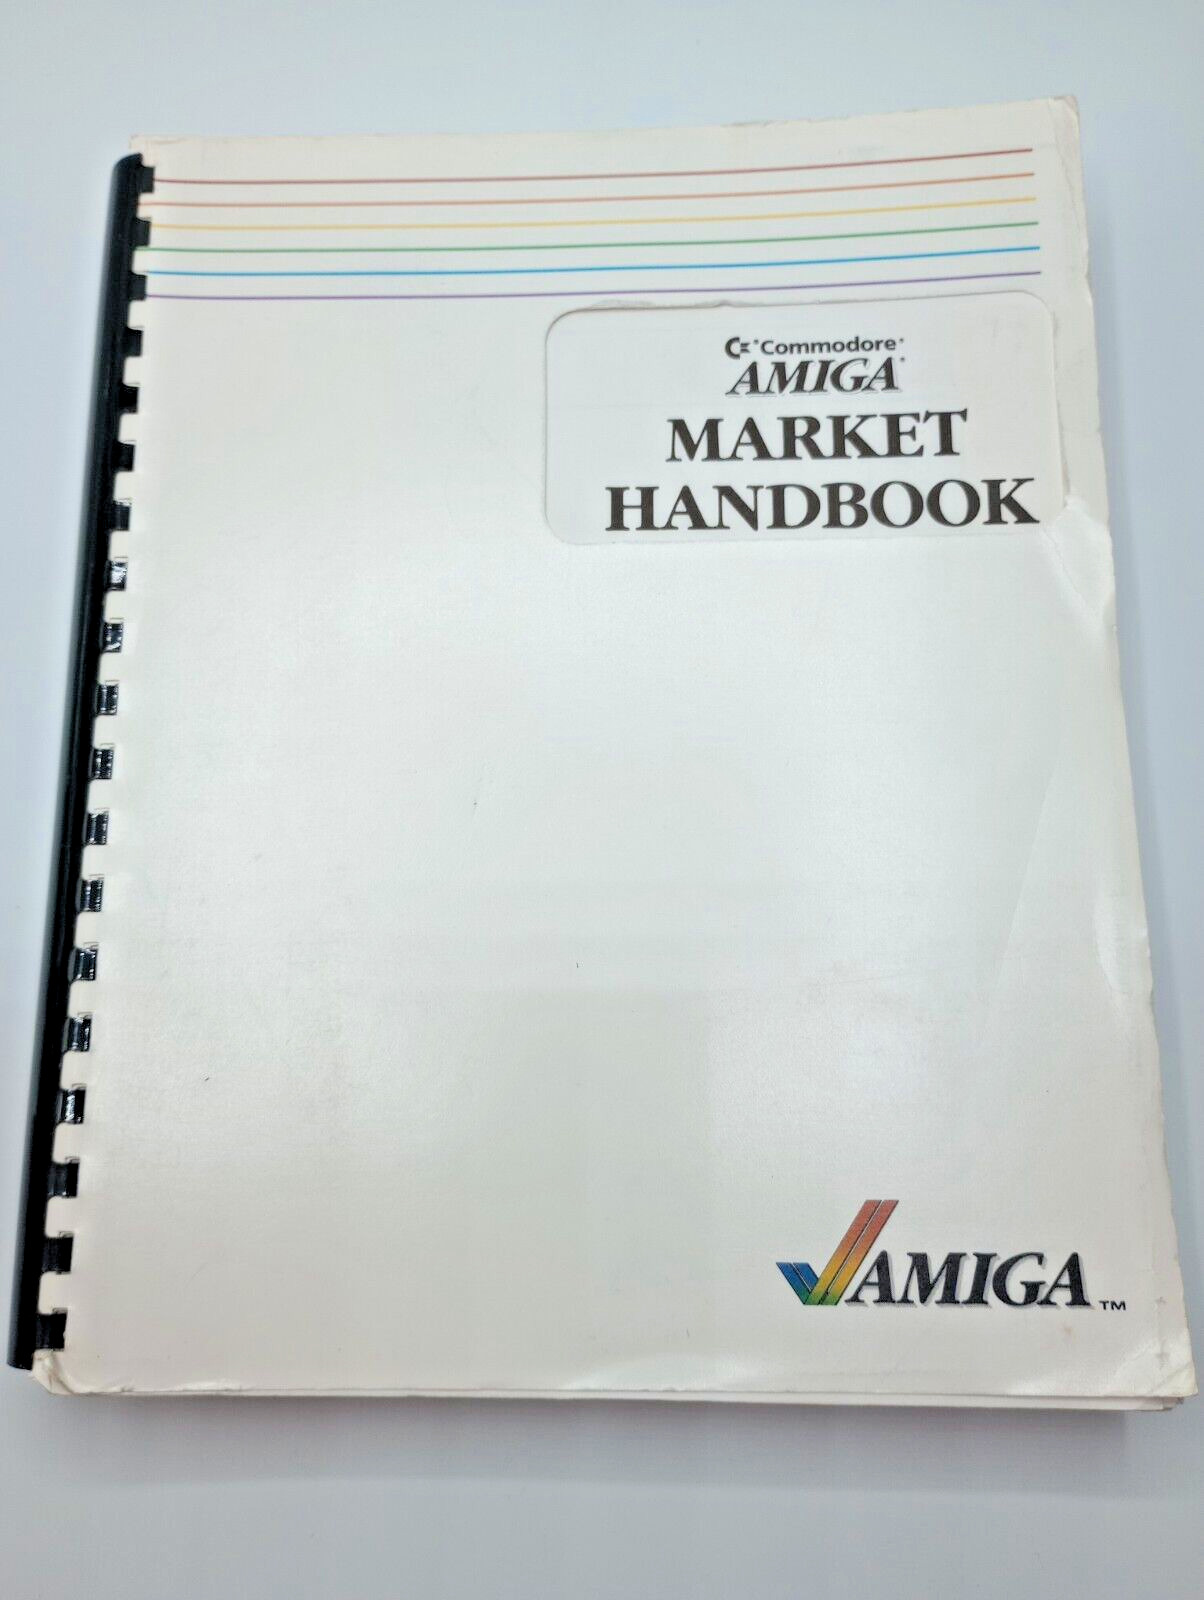 RARE VINTAGE Commodore Amiga Market Handbook (1987) - Product & Mktg. Group v1.0